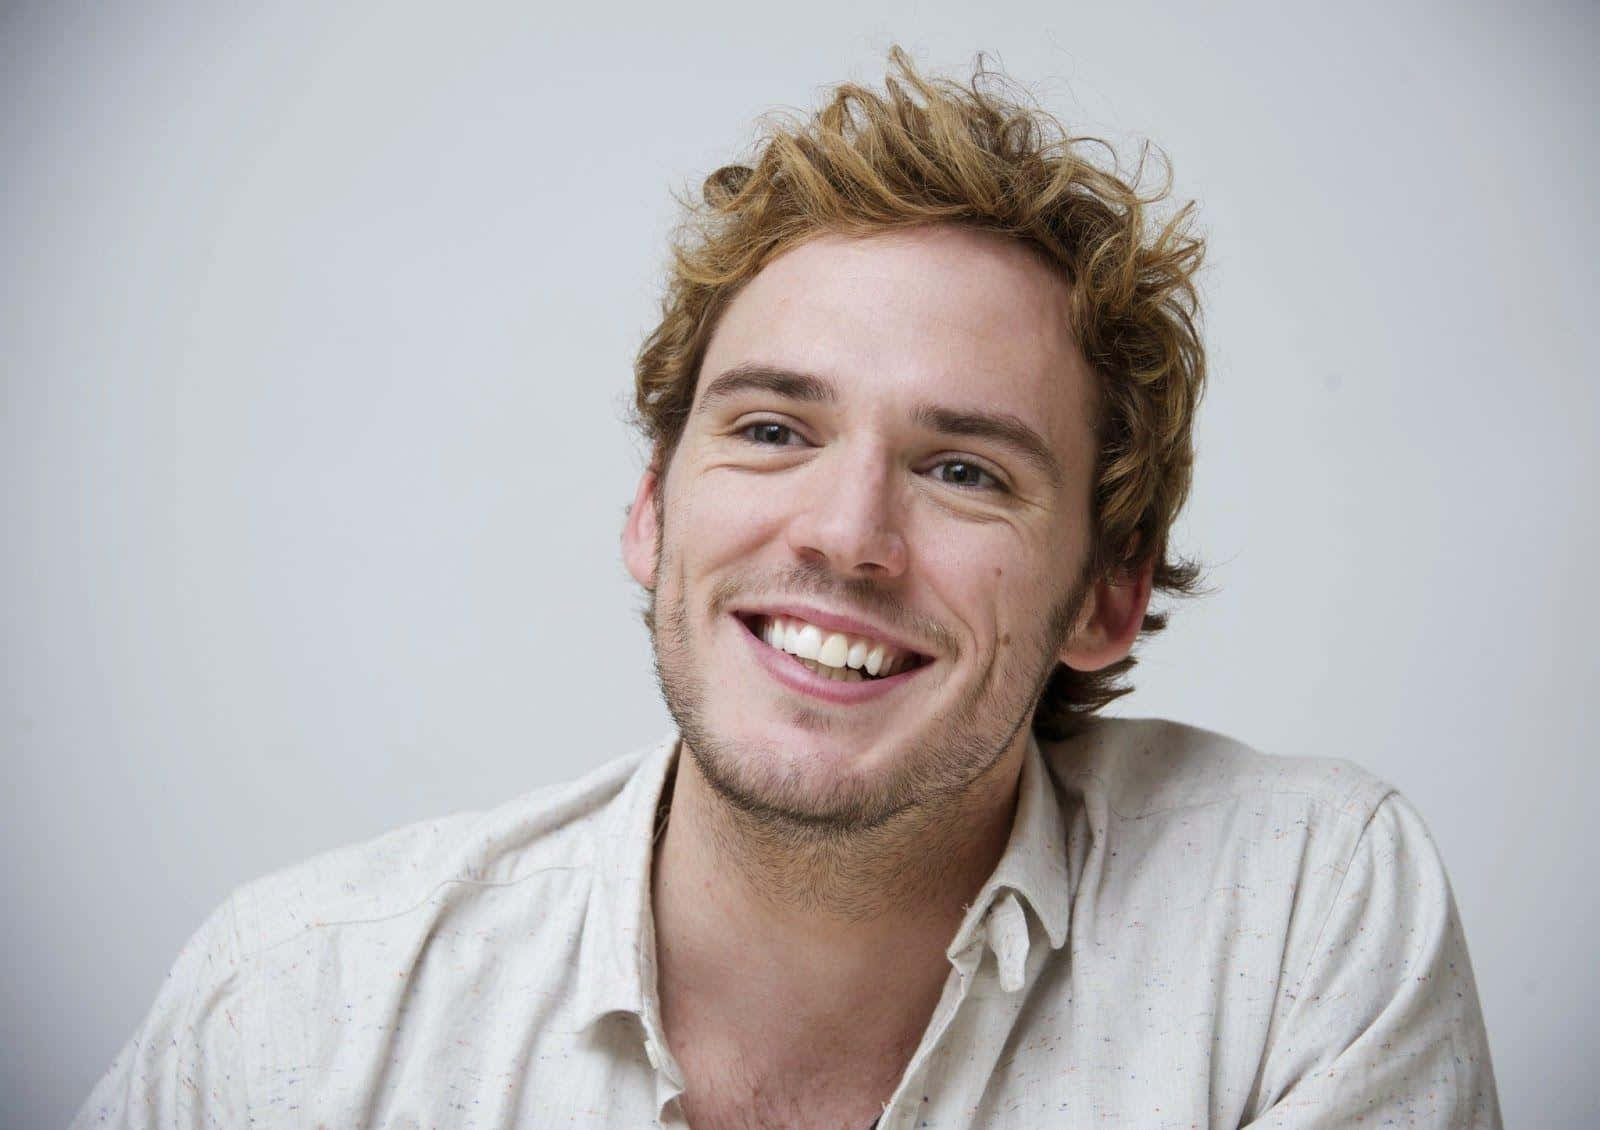 Download Smiling Portrait Of Actor Sam Claflin Wallpaper | Wallpapers.com